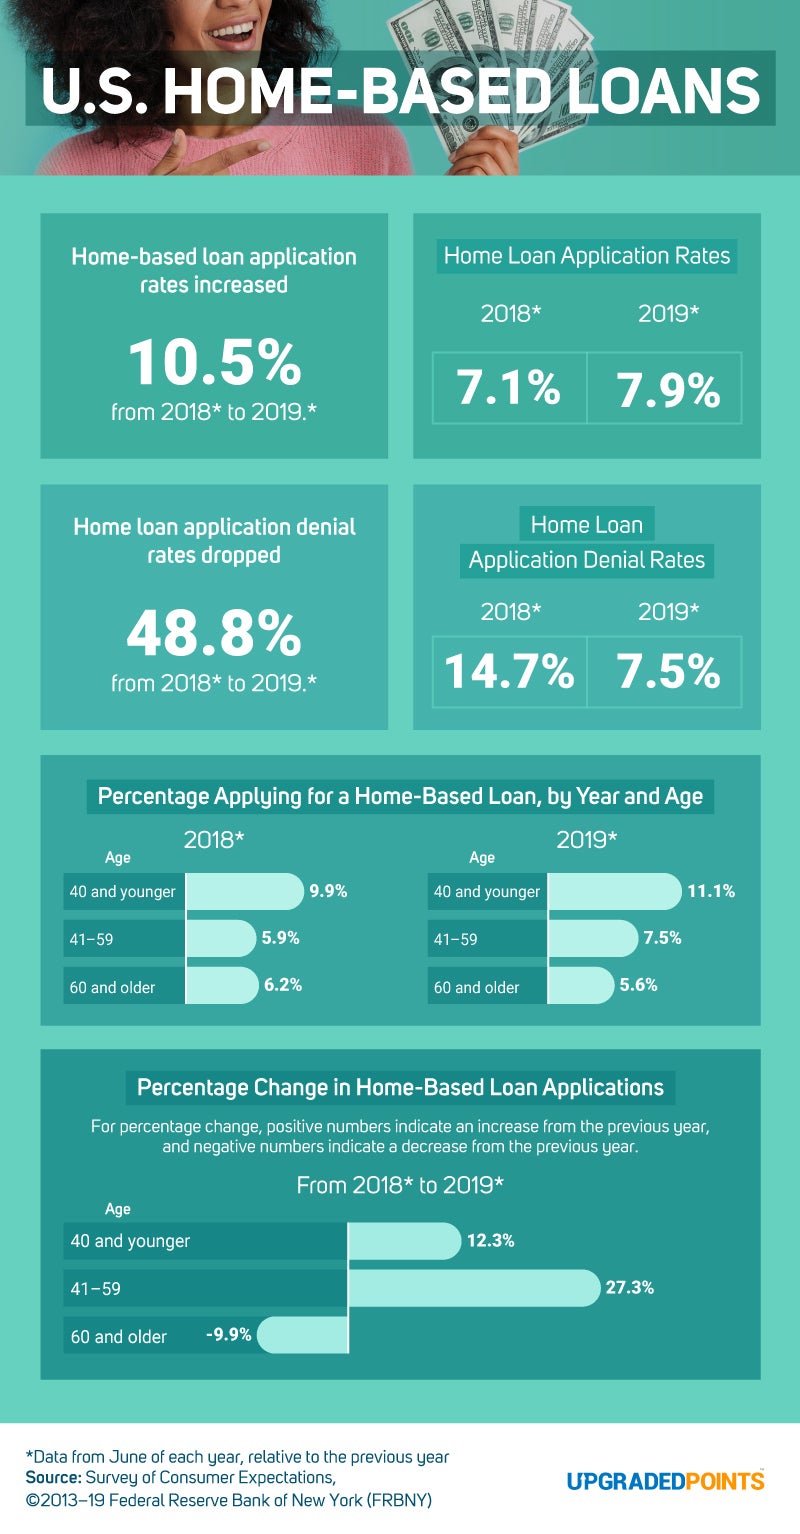 U.S Home-Based Loans